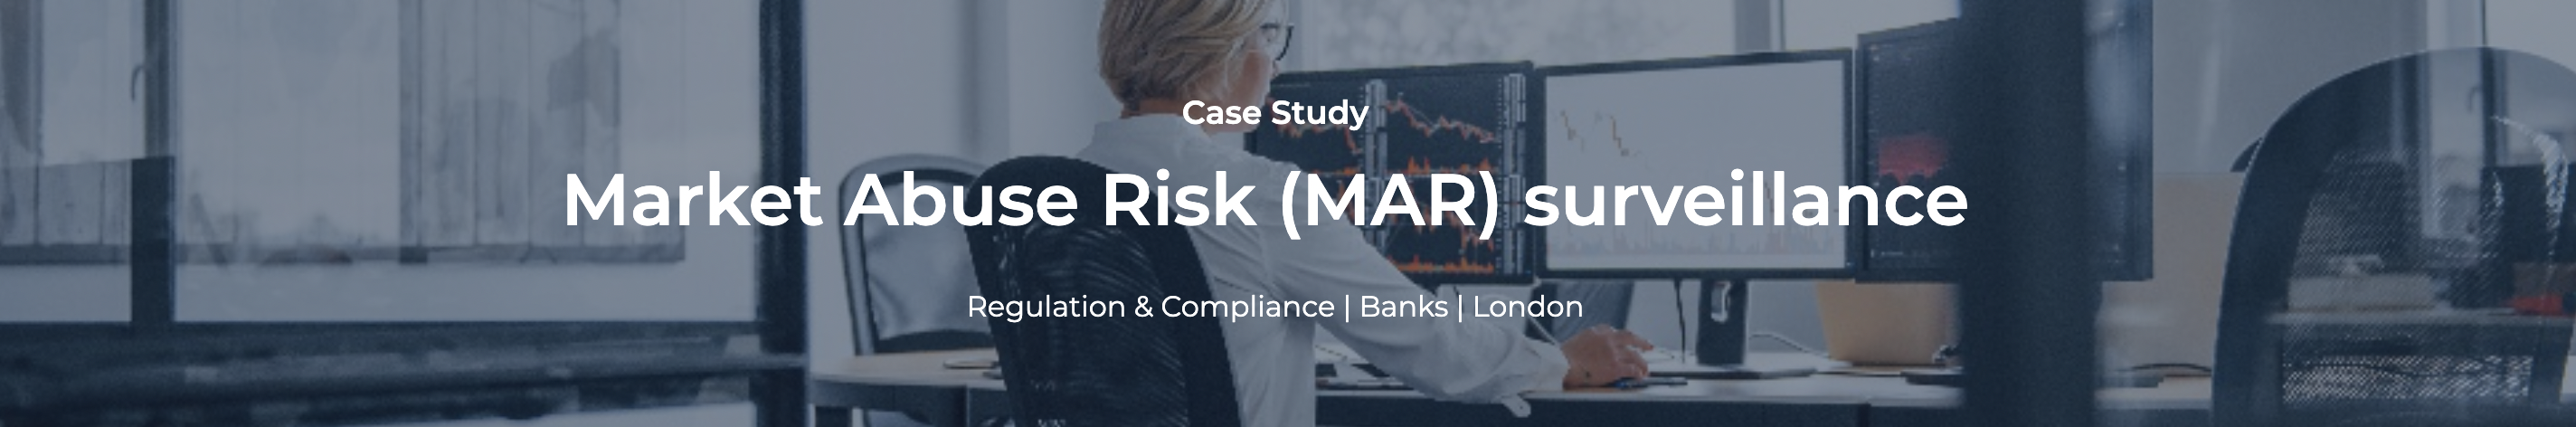 Case Study: Market Abuse Risk (MAR) surveillance